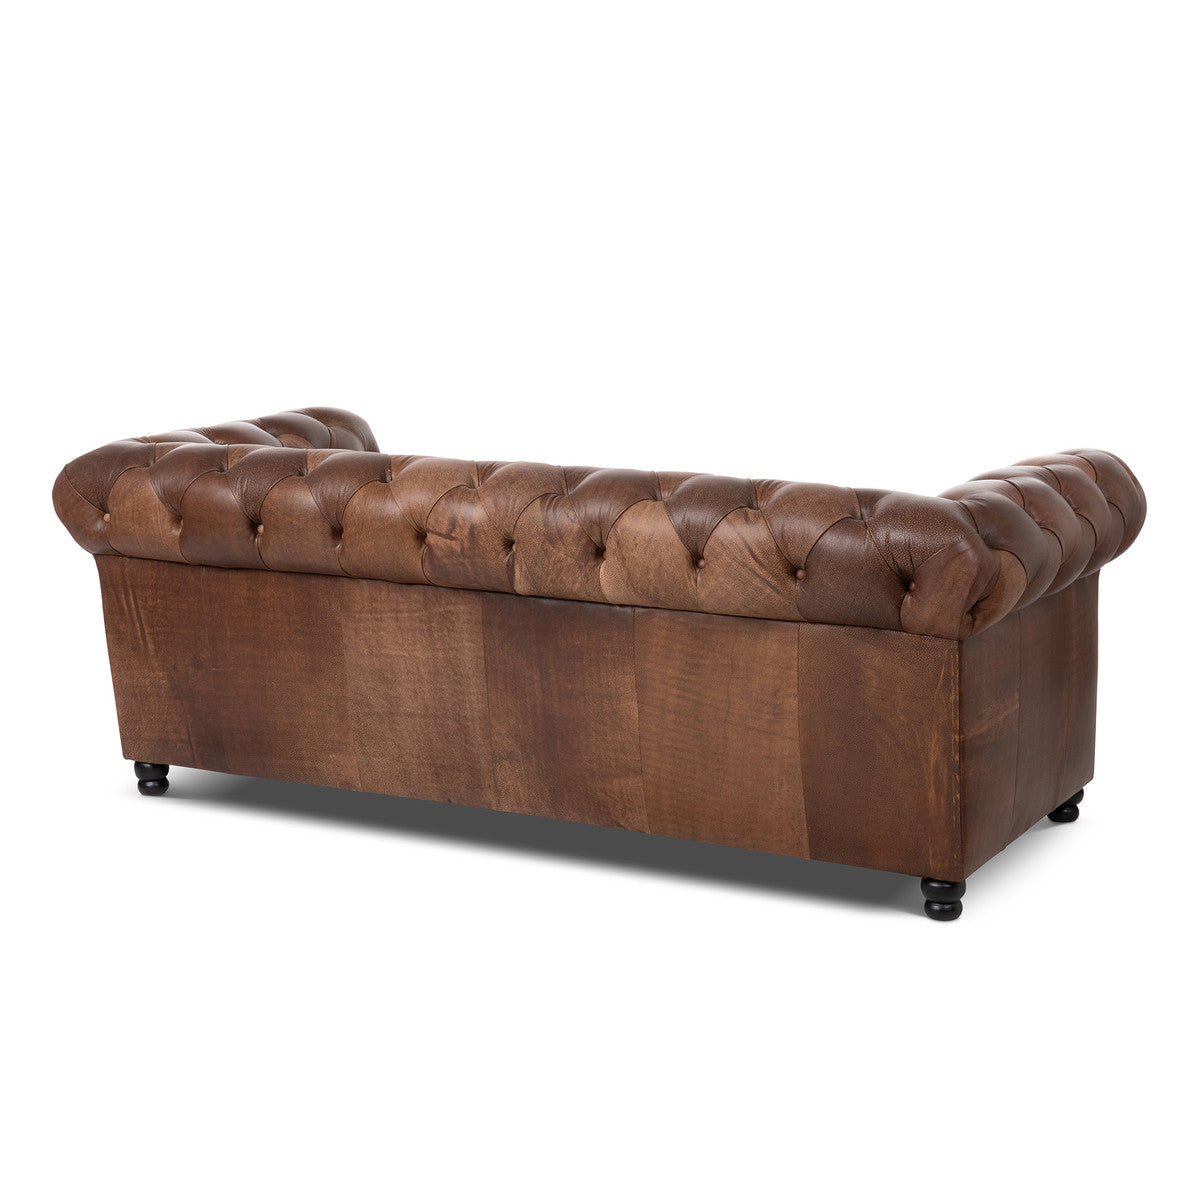 Barrington Tufted Leather Sofa, Vintage Umber by Park Hill